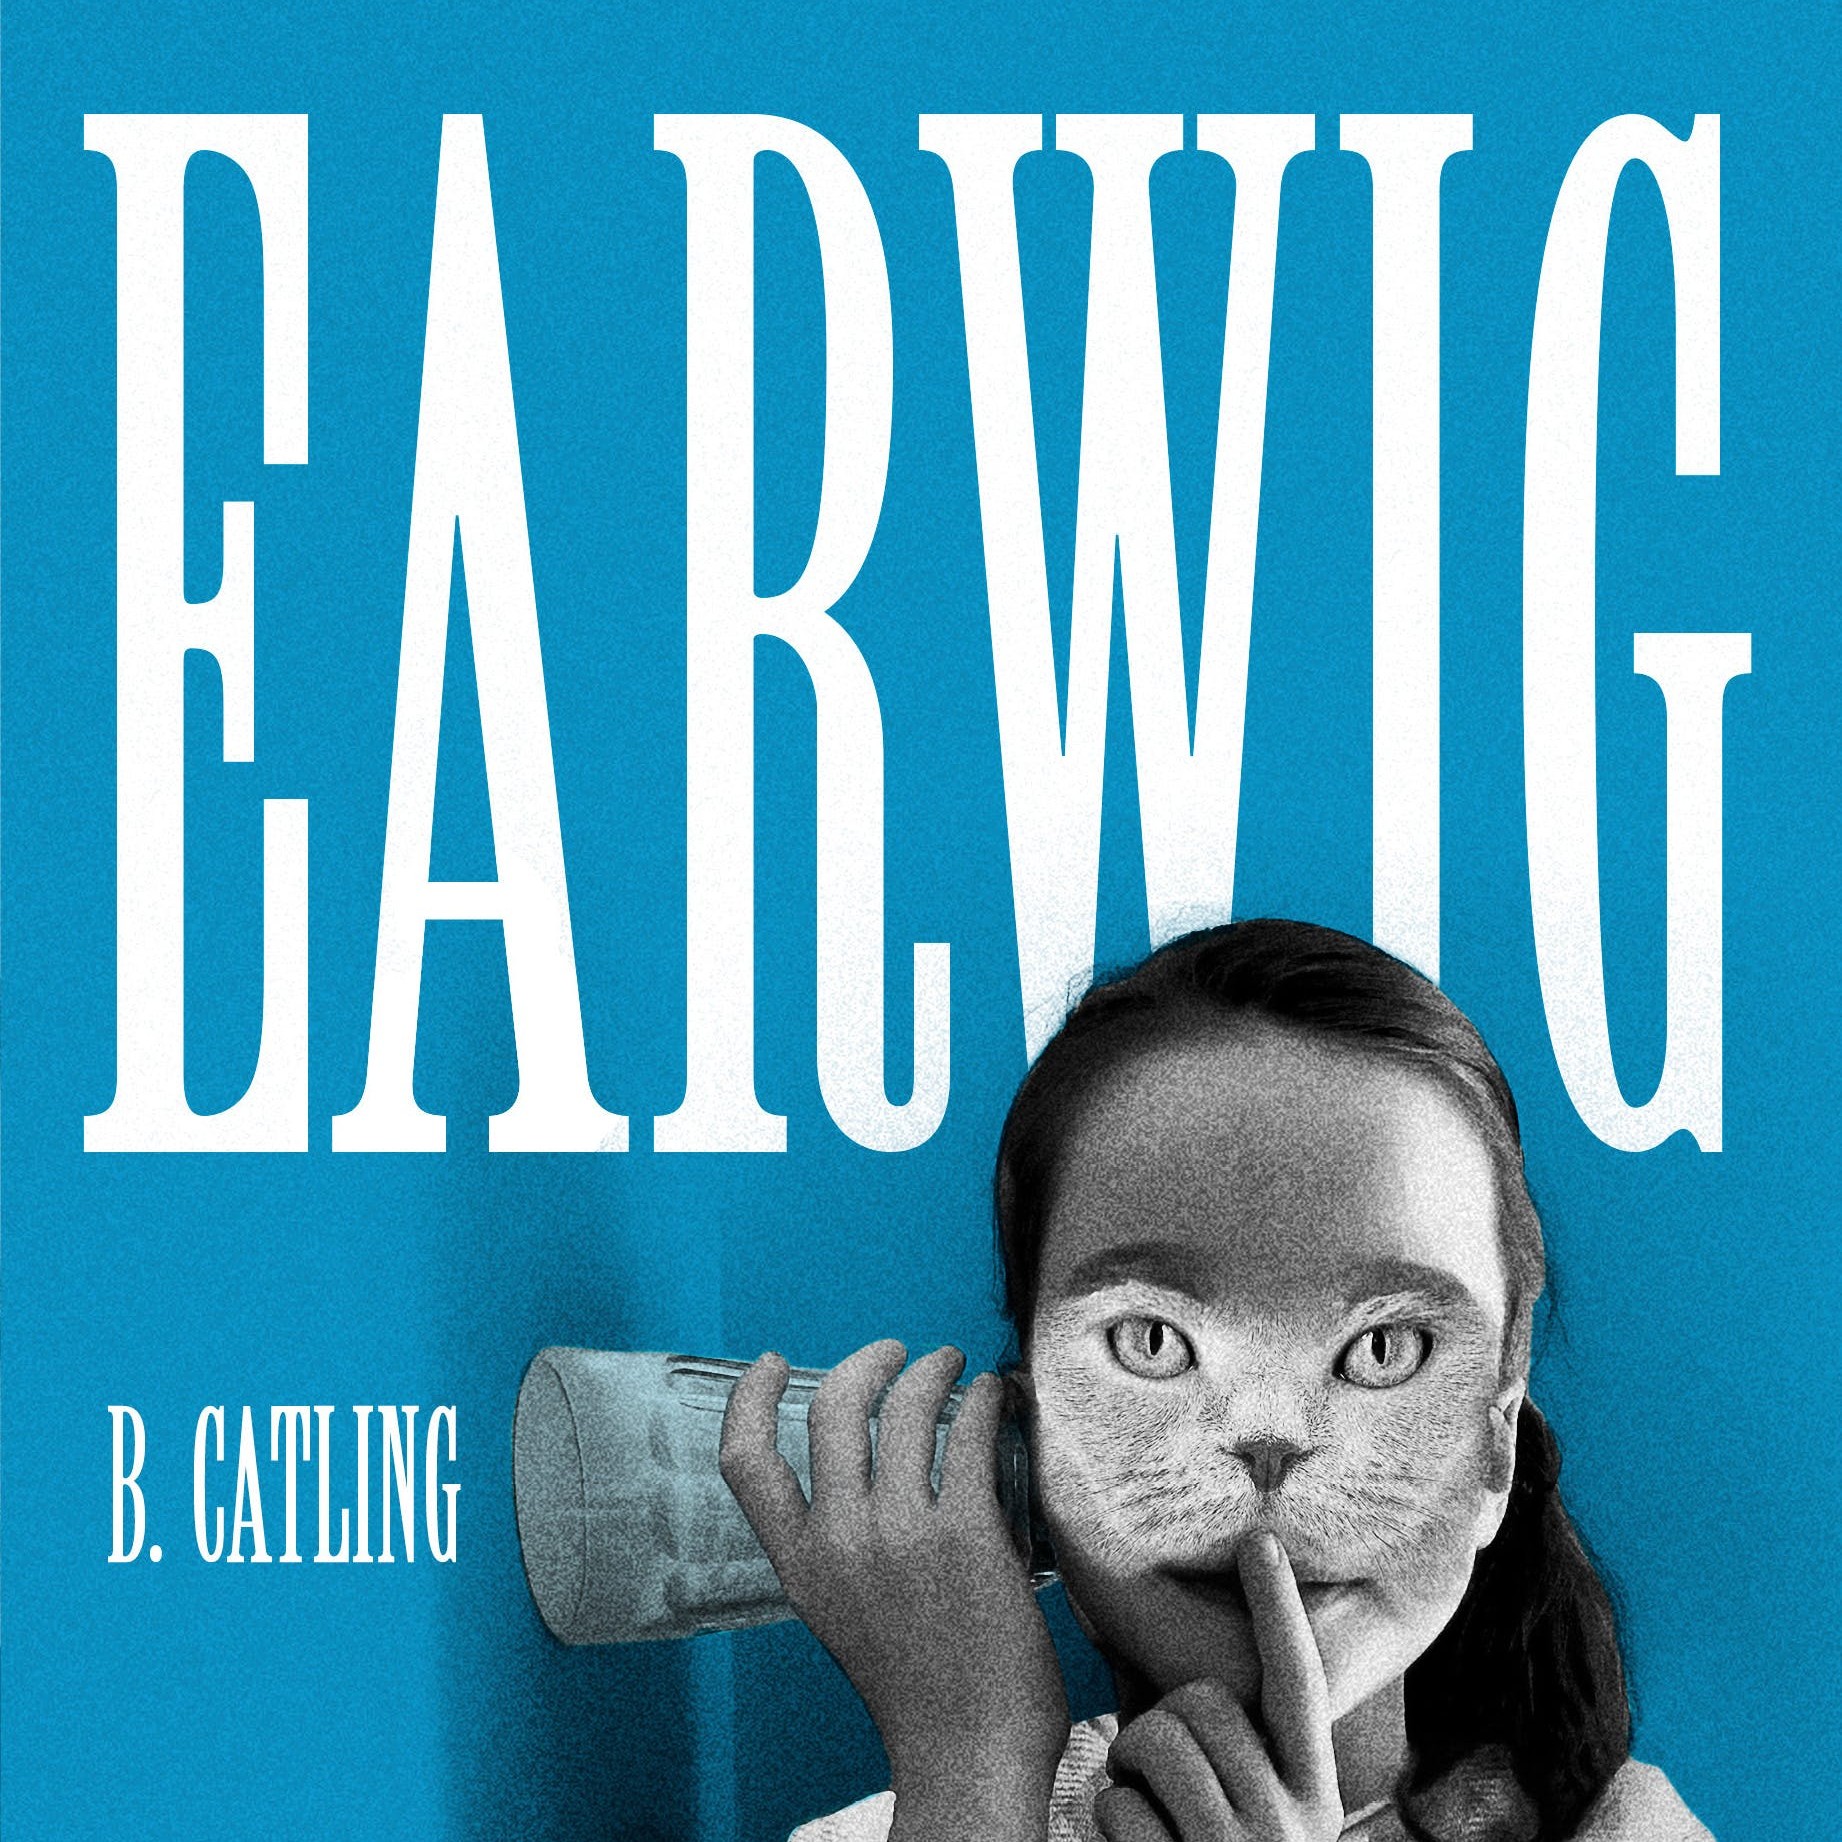 Earwig by Brian Catling